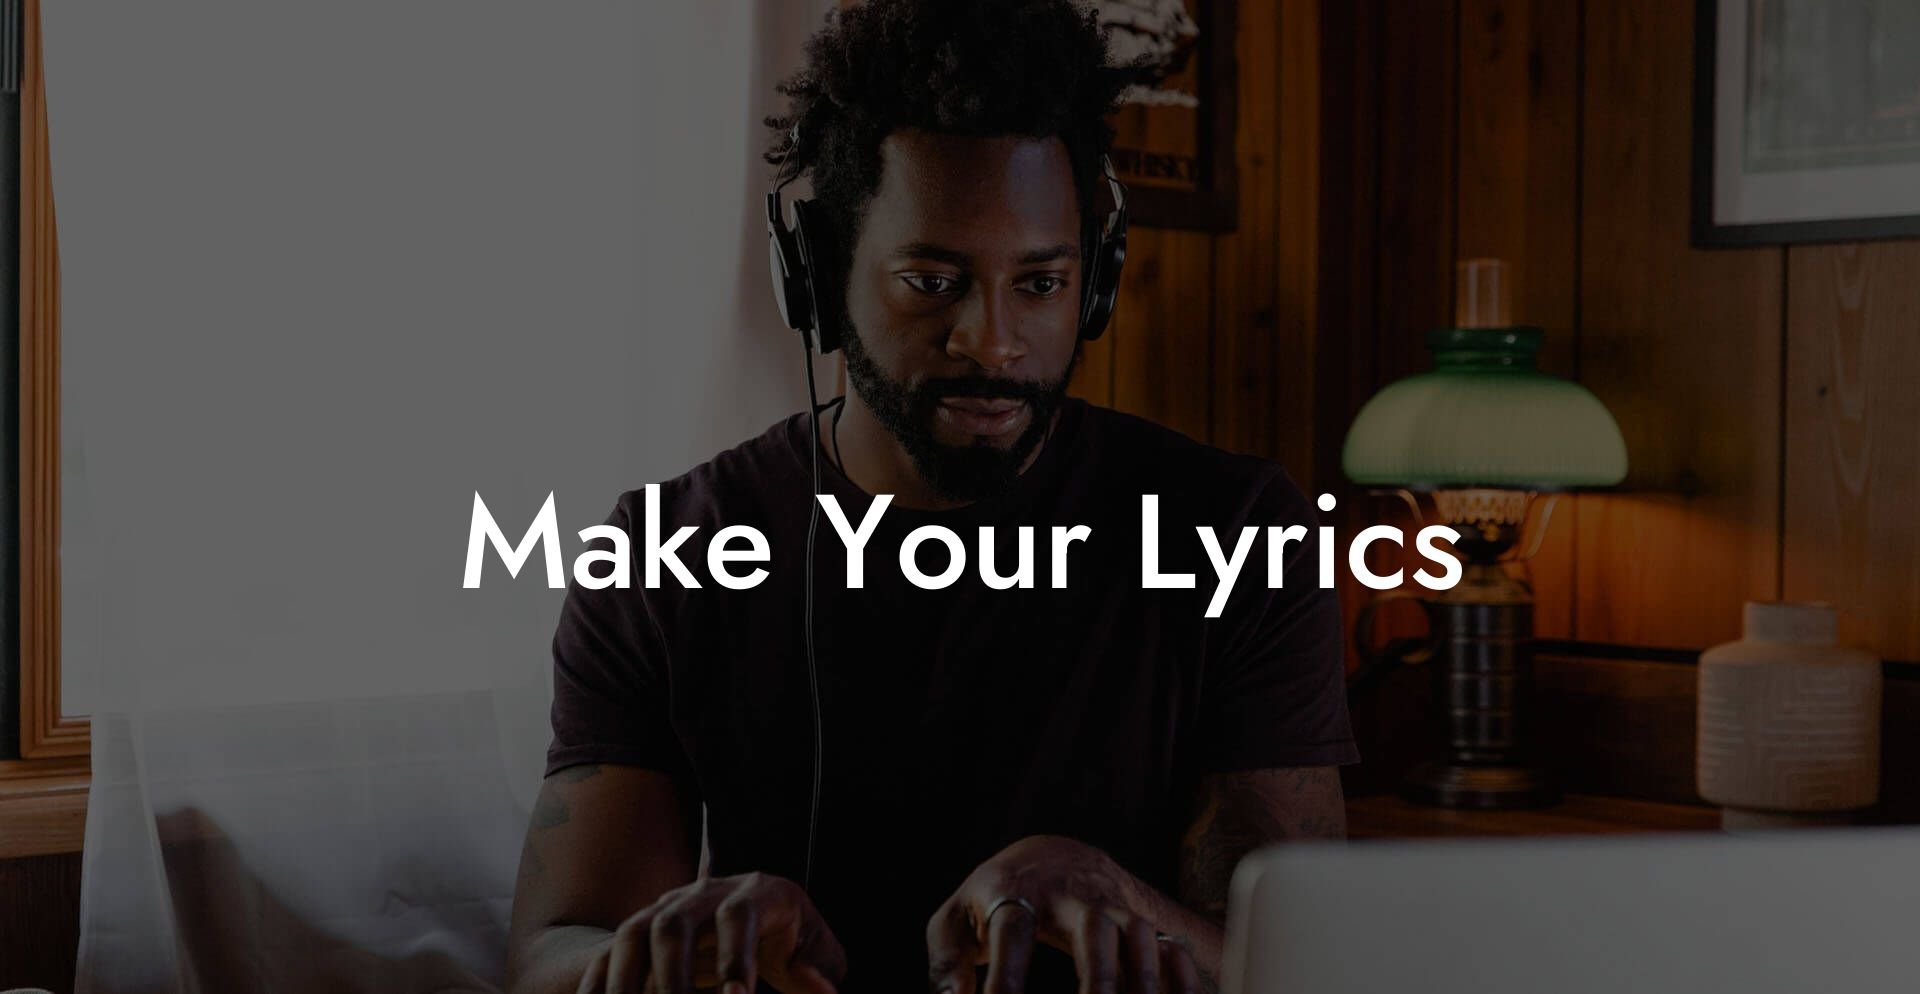 make your lyrics lyric assistant